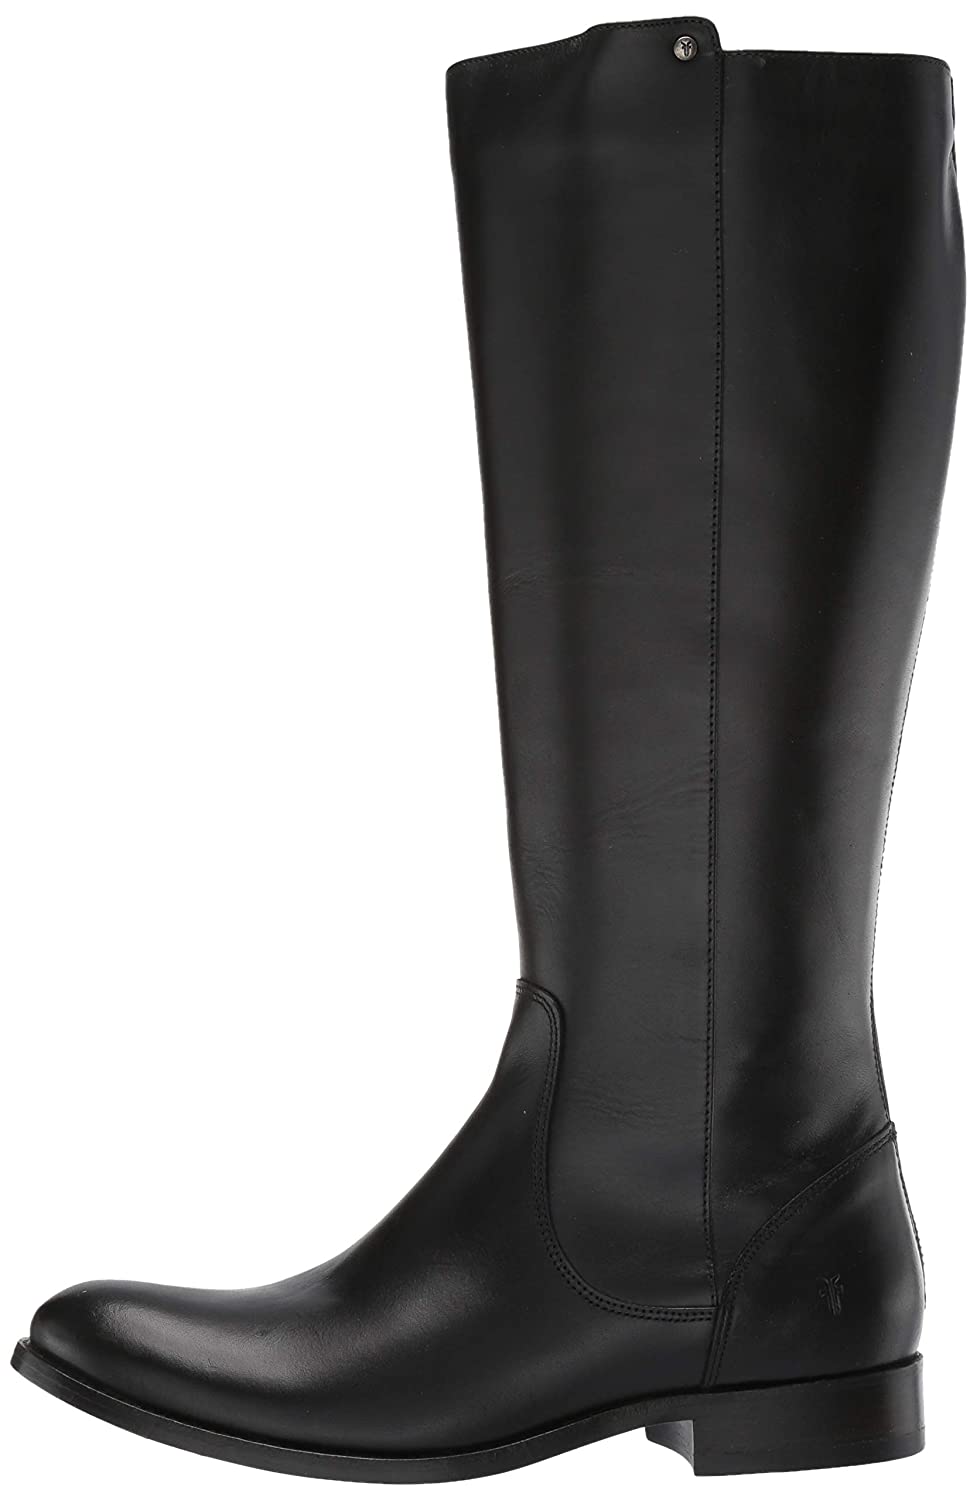 FRYE Women's Melissa Stud Back Zip Riding Boot, Black Extended, Size 7.5 6Obp US | eBay